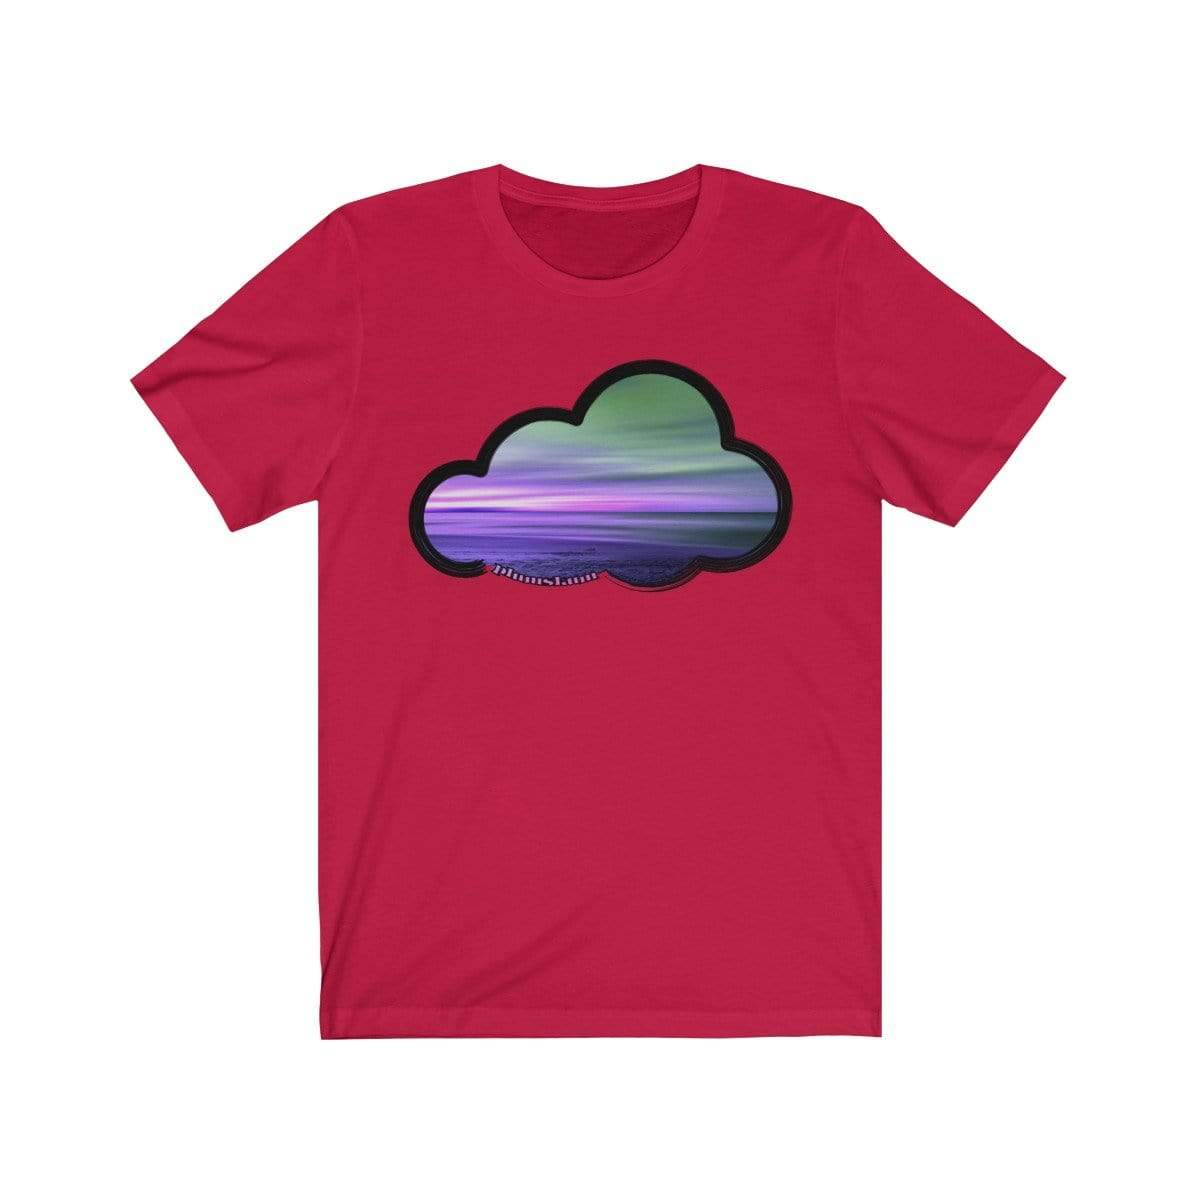 Printify T-Shirt Red / M Beaches Art Clouds Tee